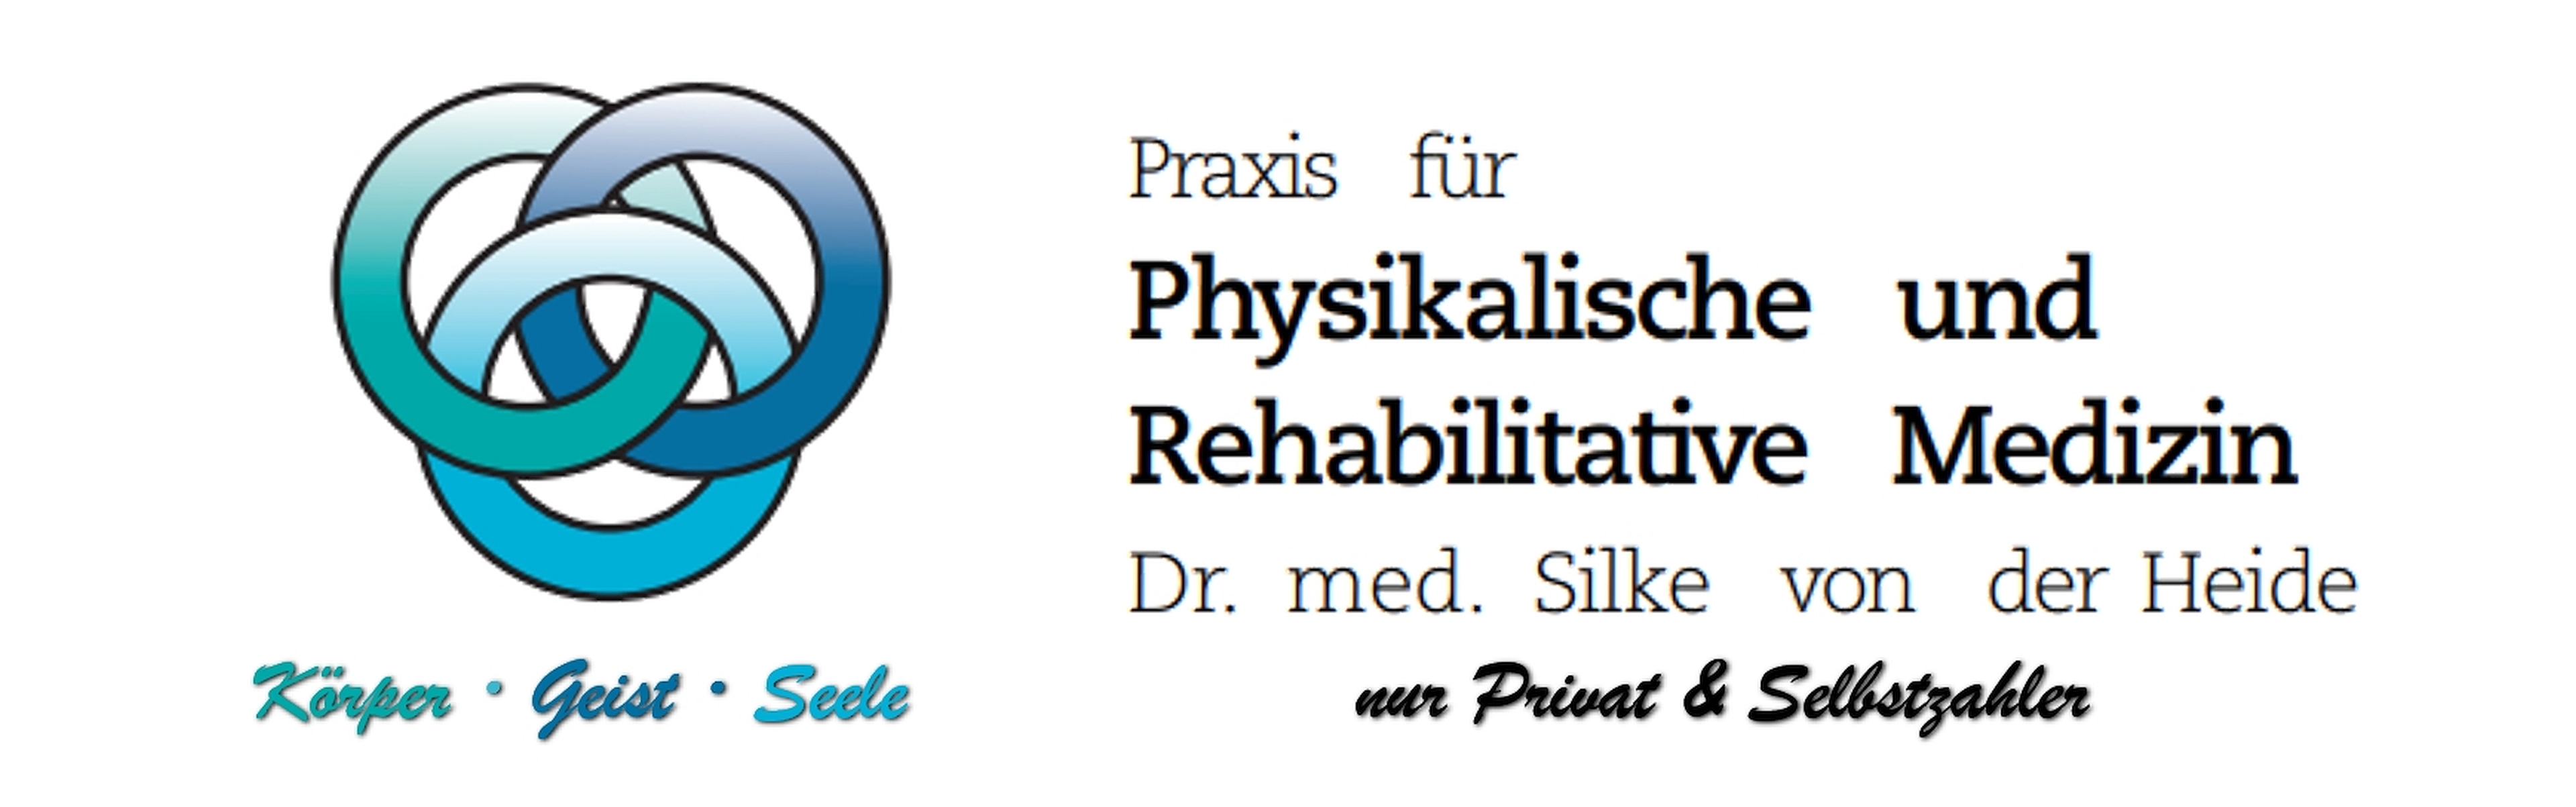 PRM-Praxis